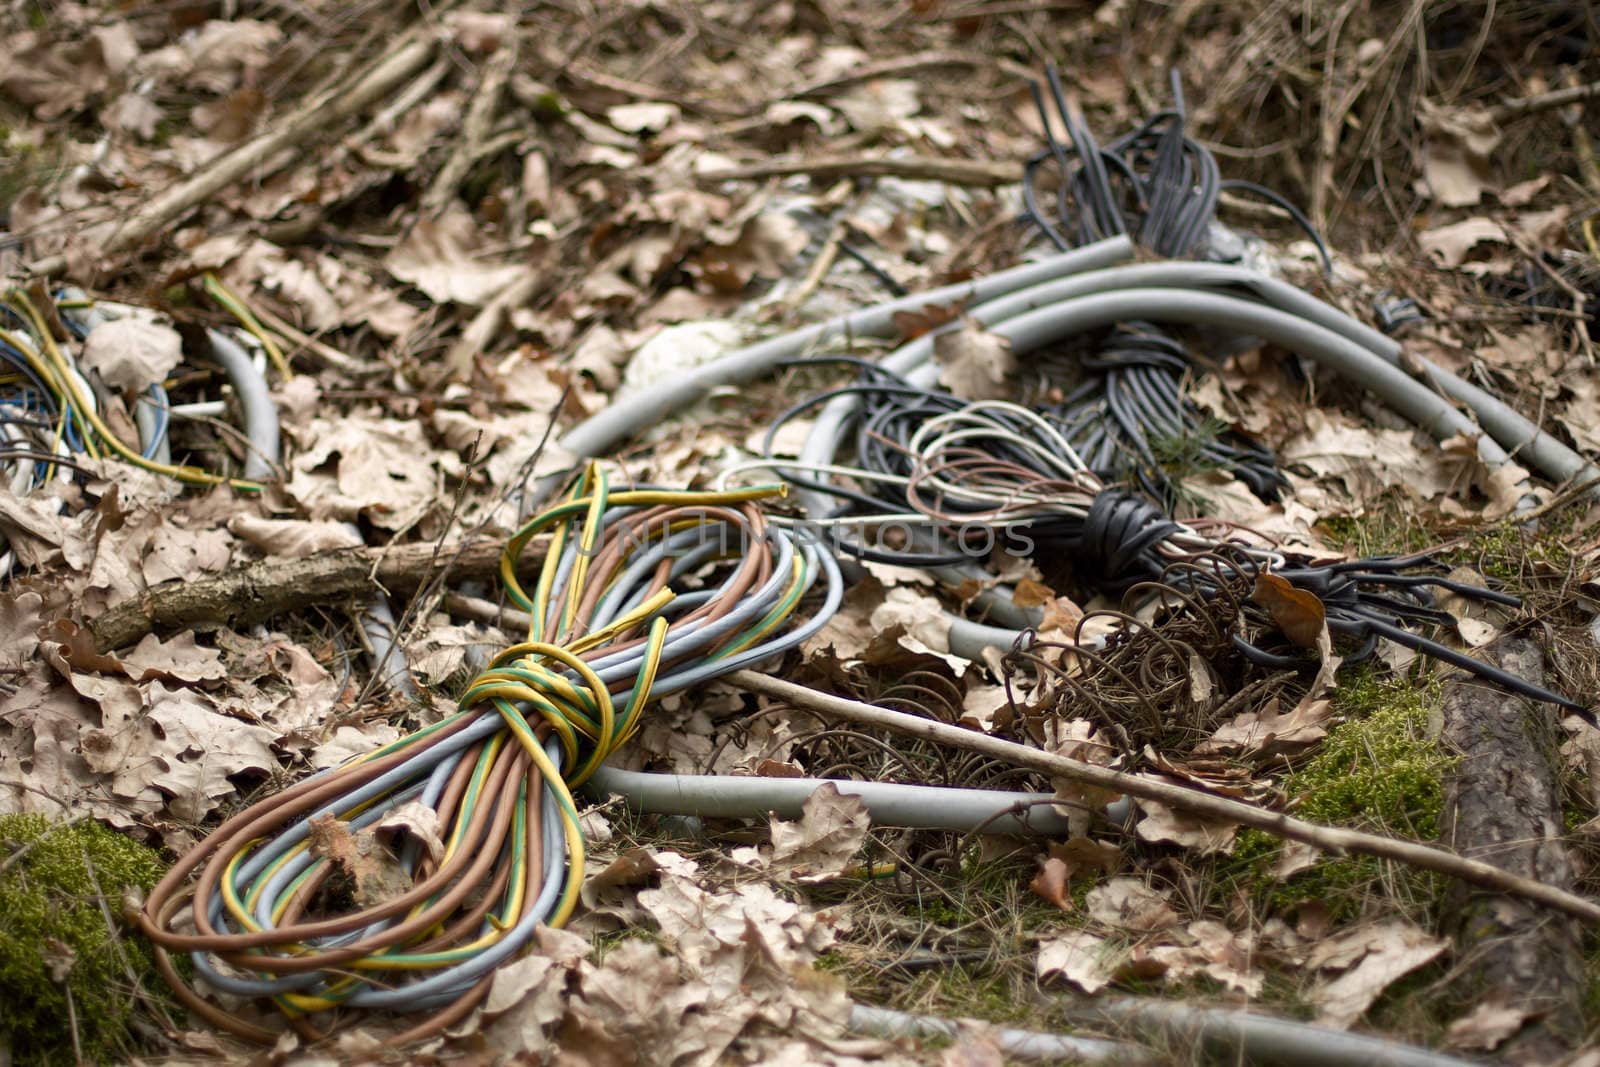 Wires rubbish in forest, Lubuskie Poland.